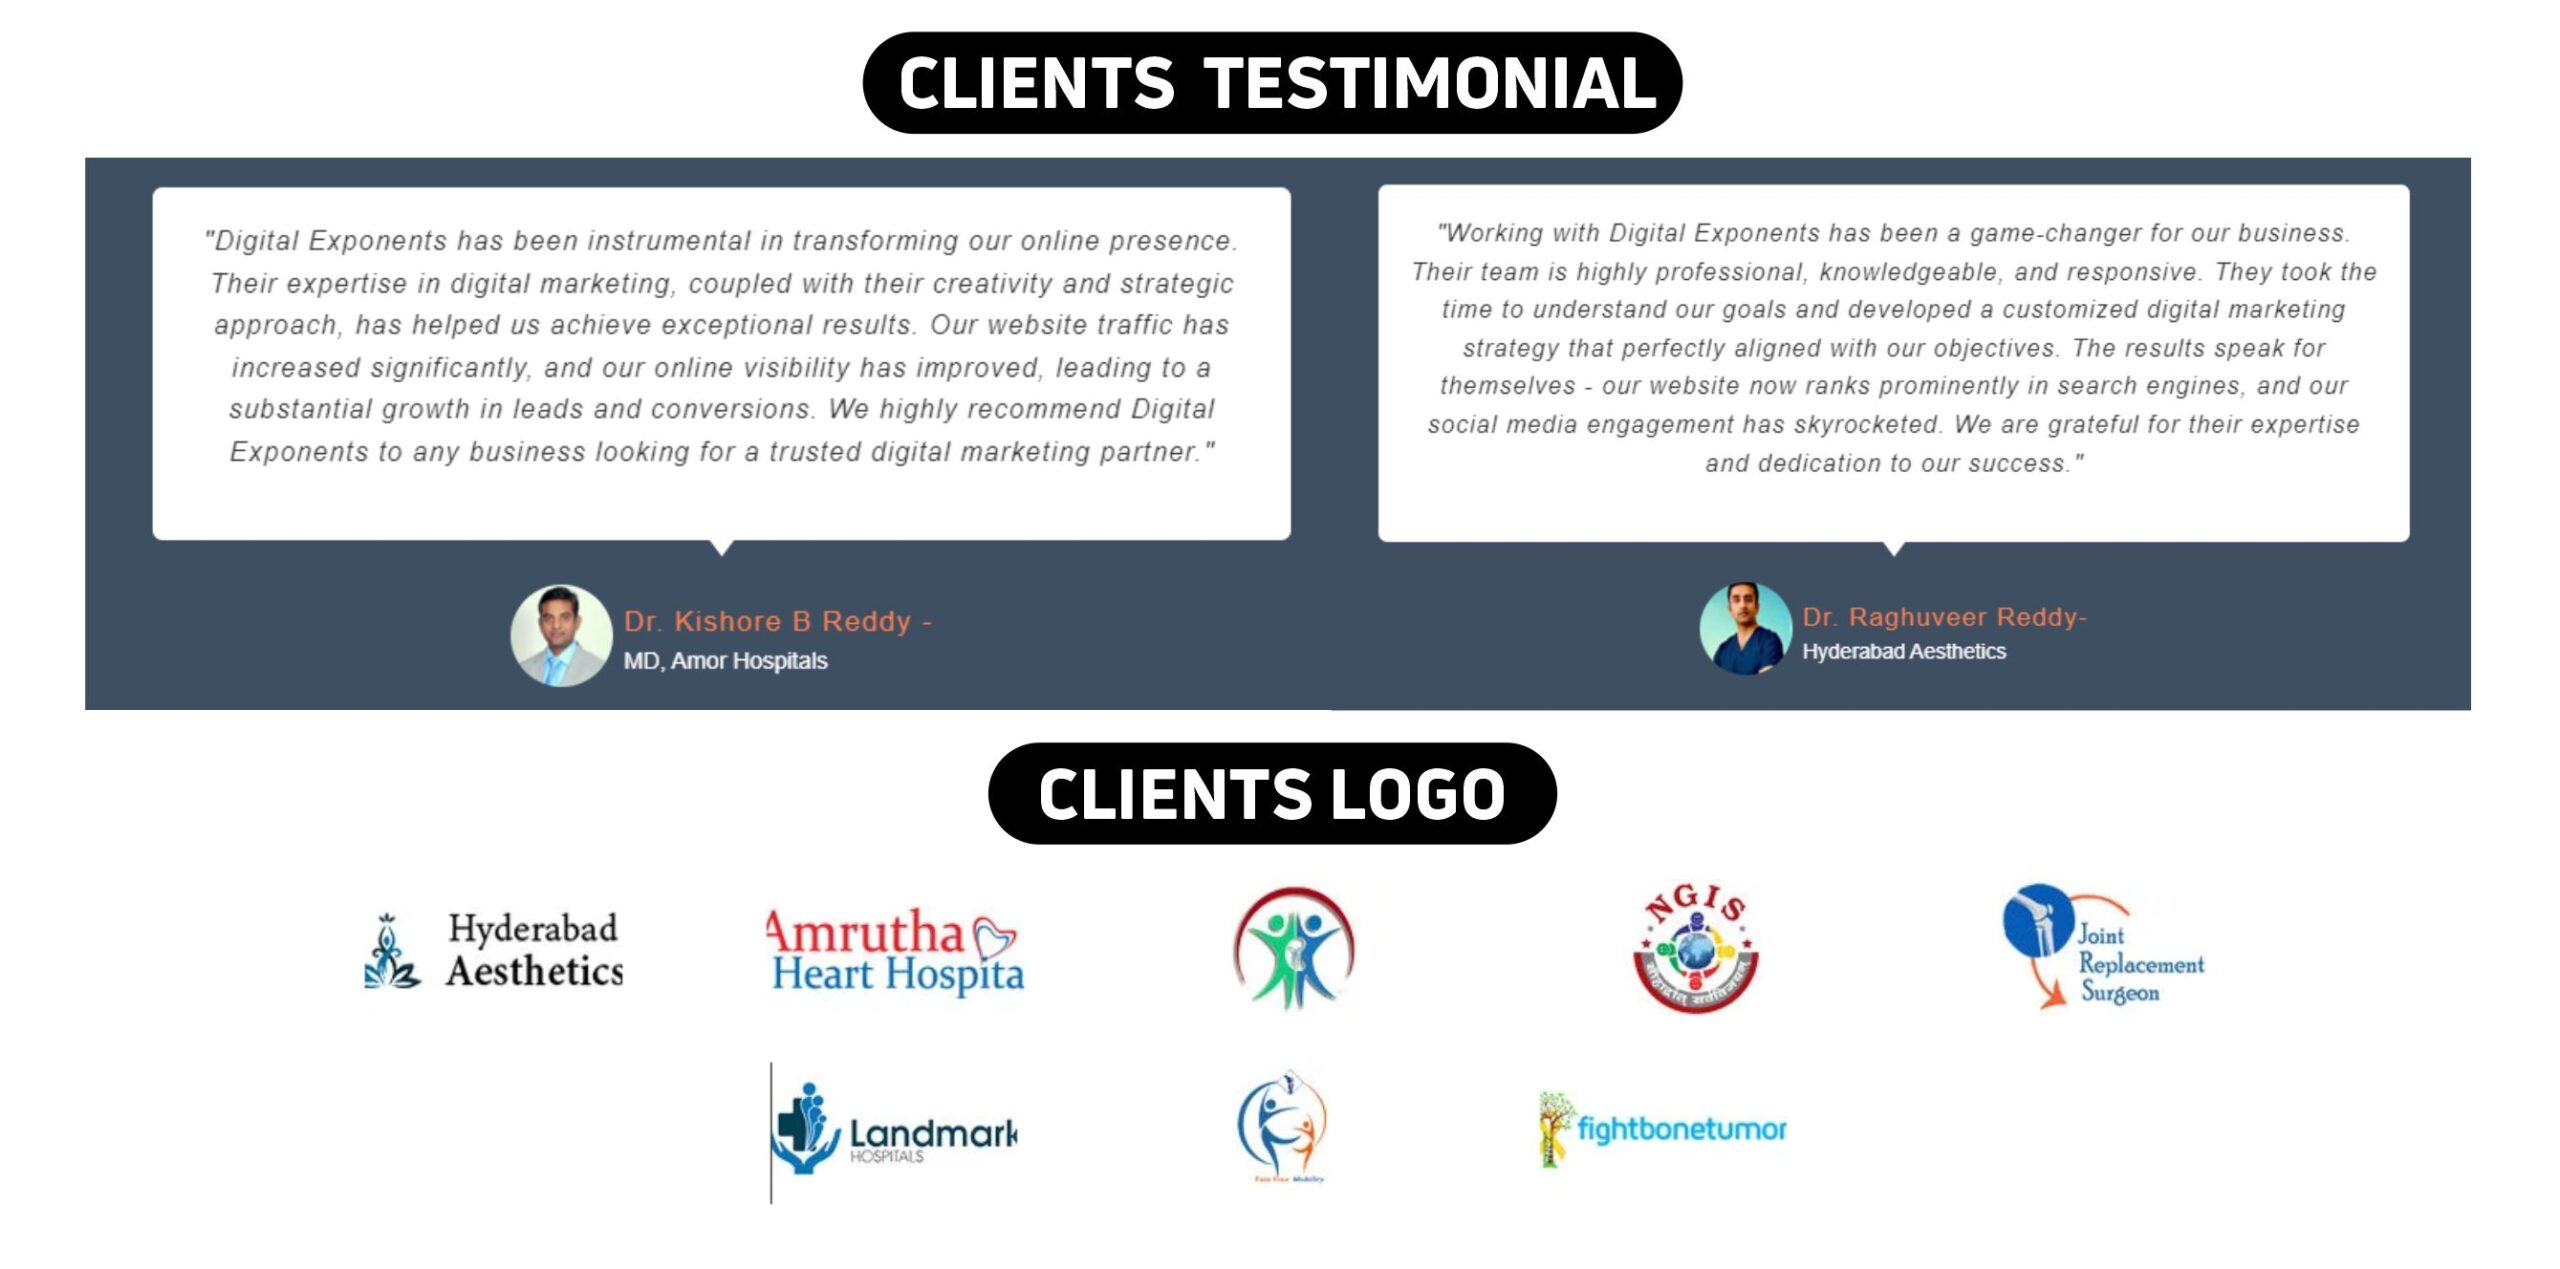 Digital Exponents Clients Testimonials & Logos